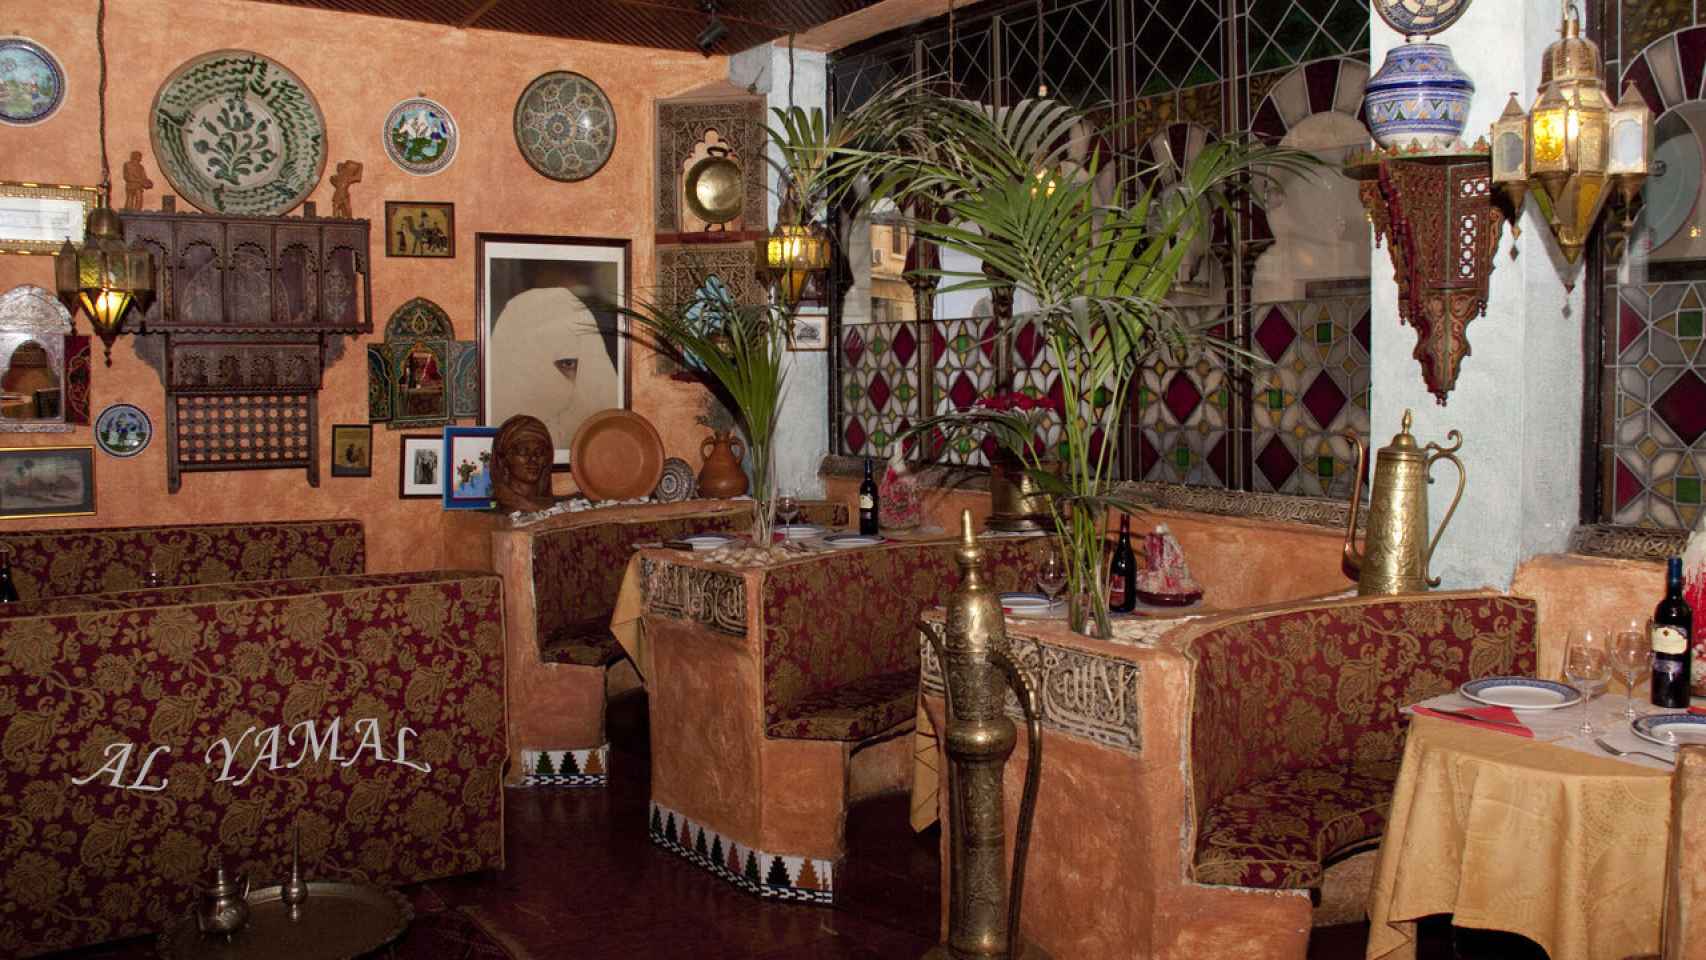 Restaurante Al Yamal decorado con motivos árabes.